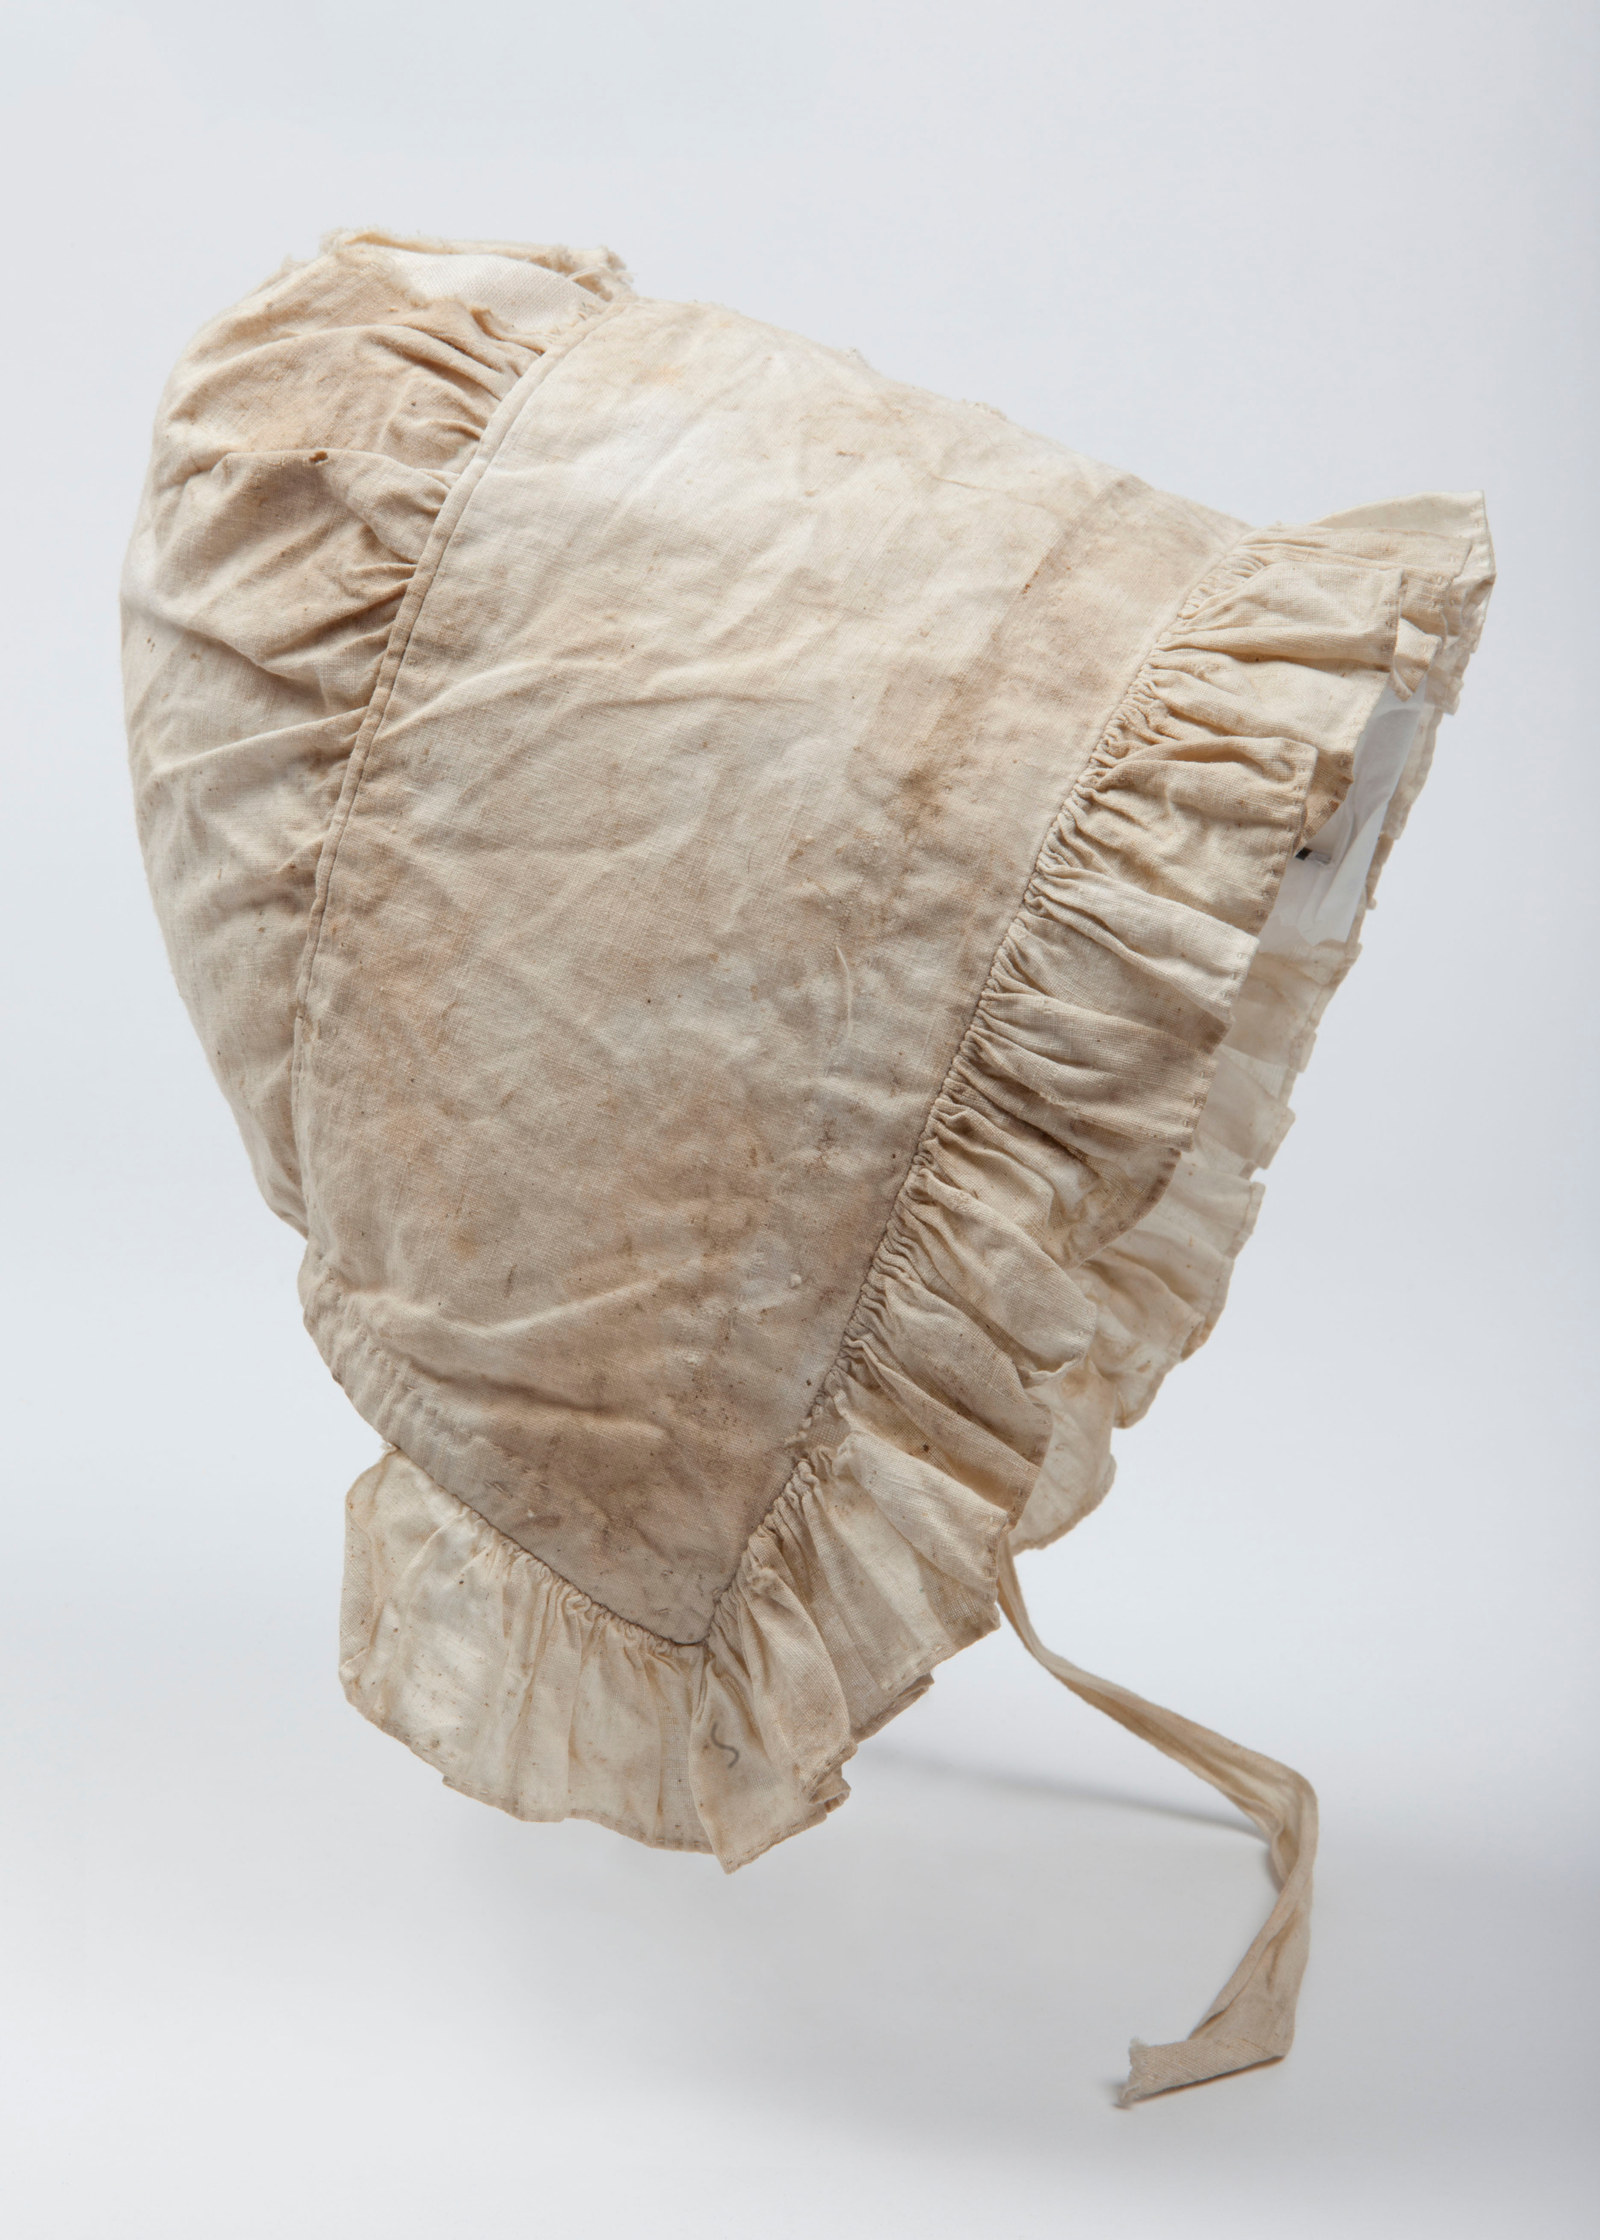 Asylum bonnet from Hyde Park Barracks Museum archaeology collection  